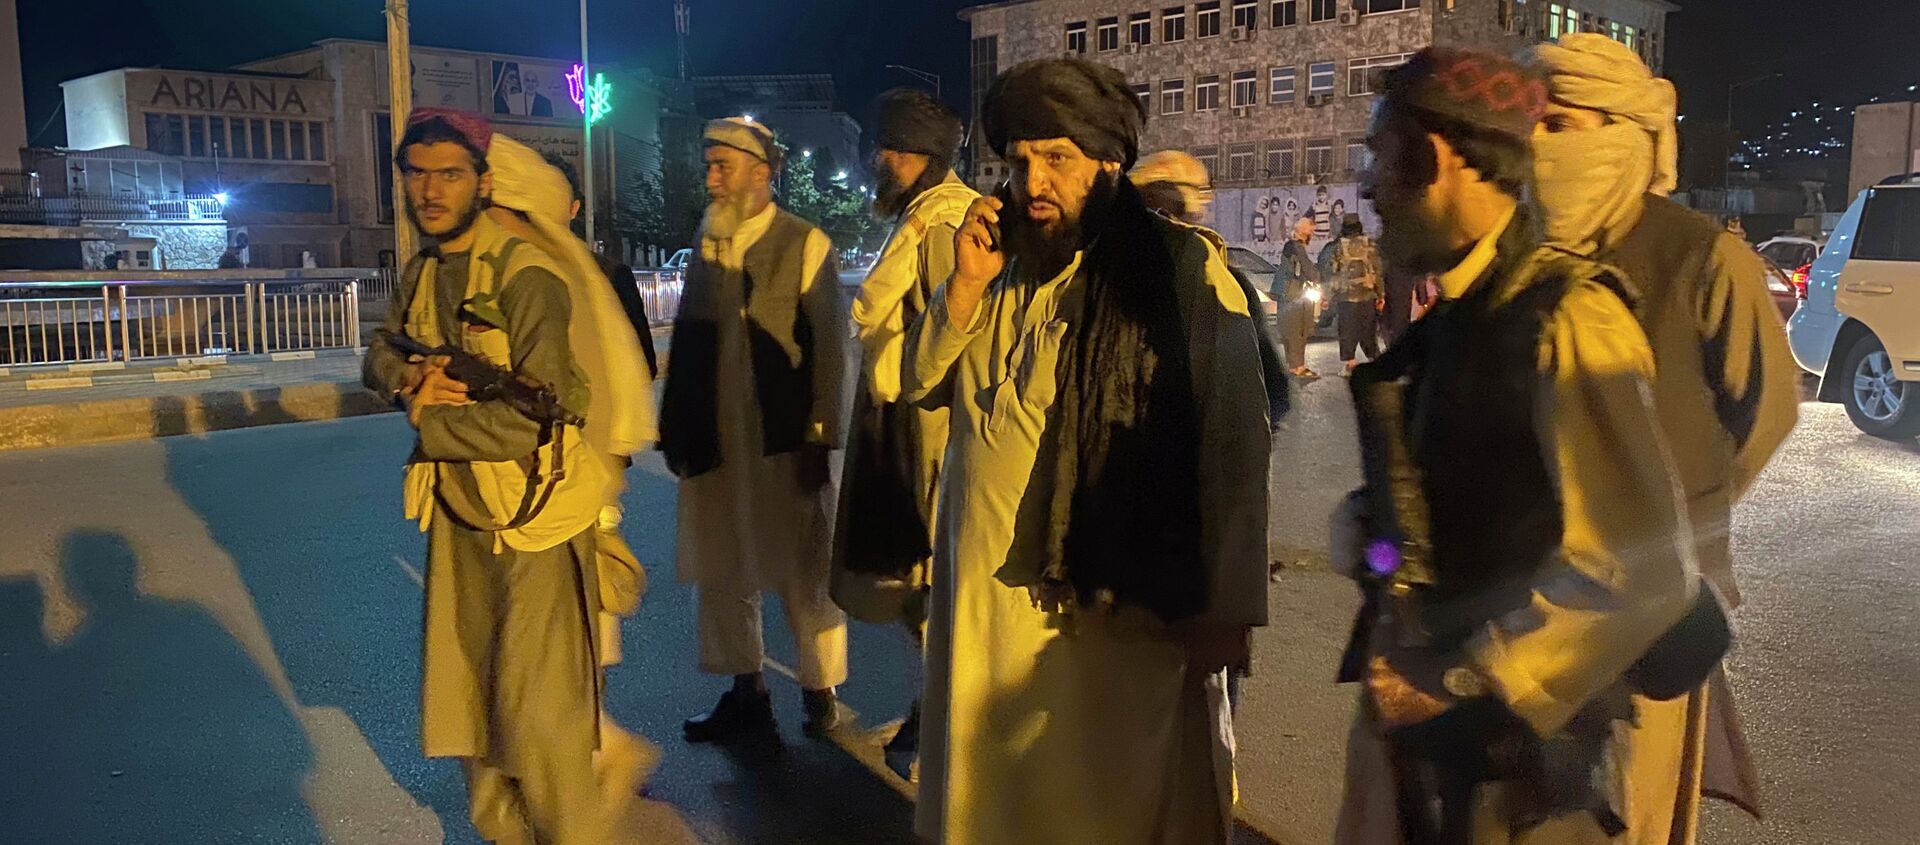 Боевики Талибана около президентского дворца в Кабуле, Афганистан, 15 августа 2021 года - Sputnik Кыргызстан, 1920, 16.08.2021